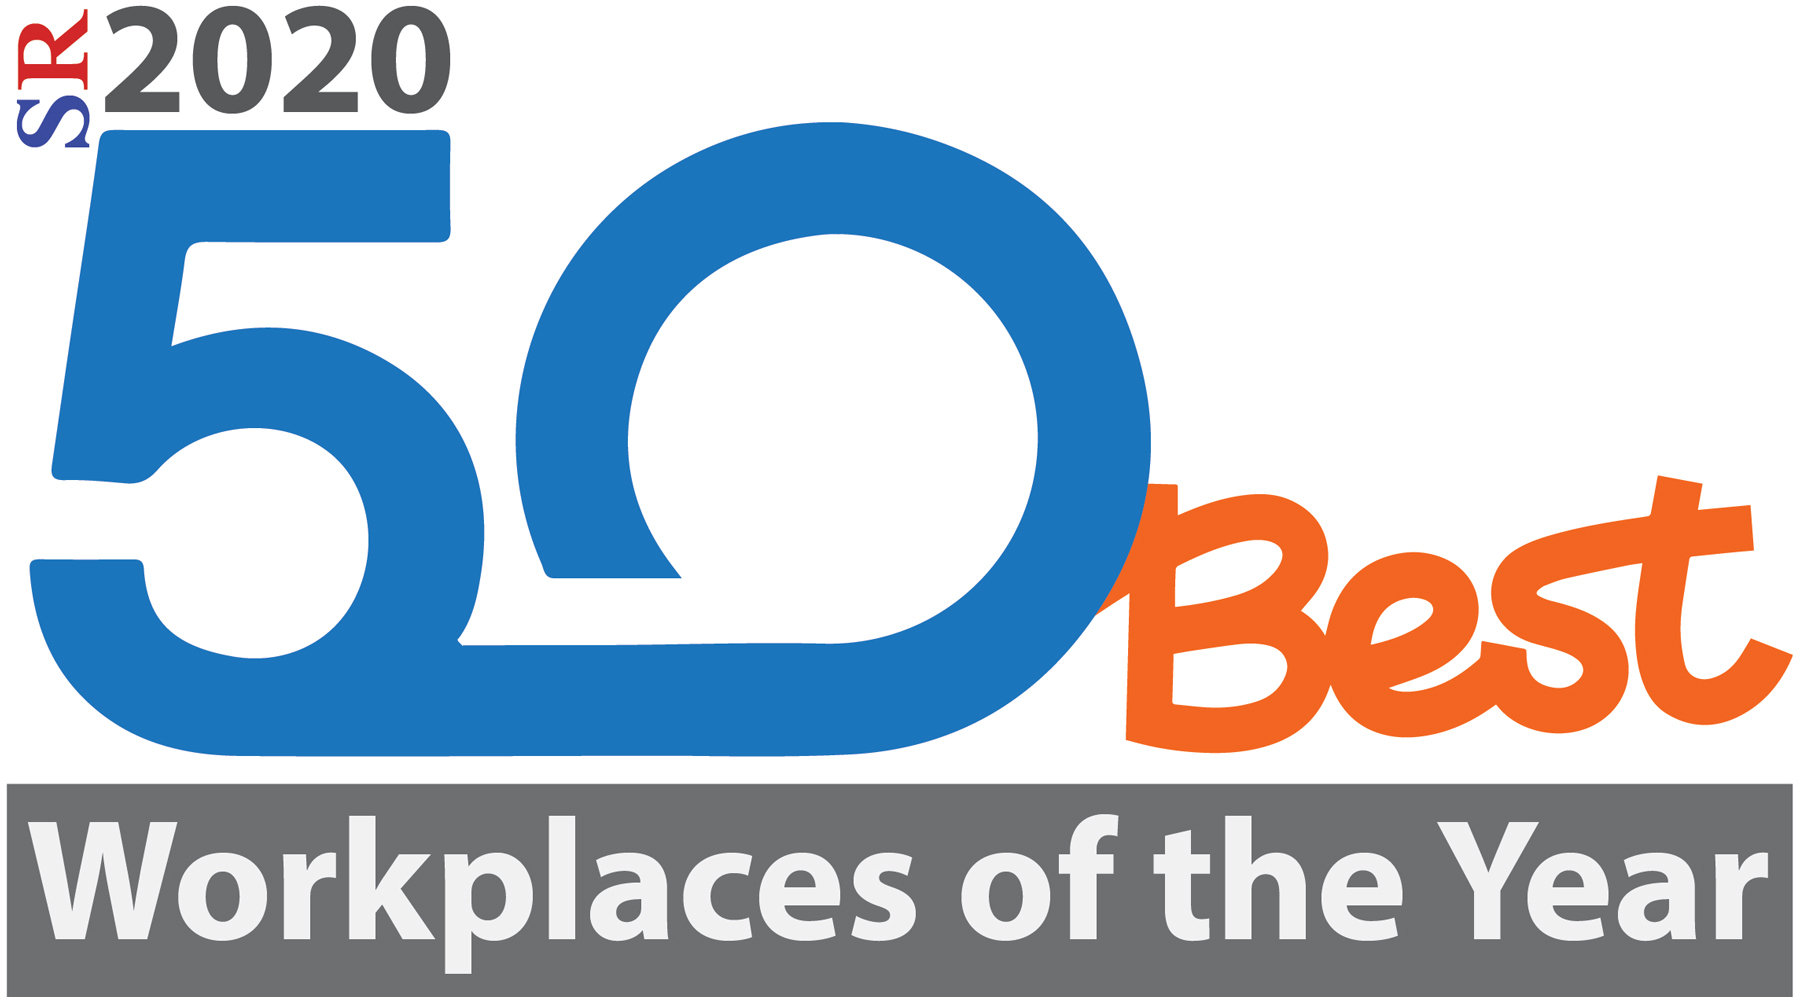 Timeline 50 Best Workplaces logo